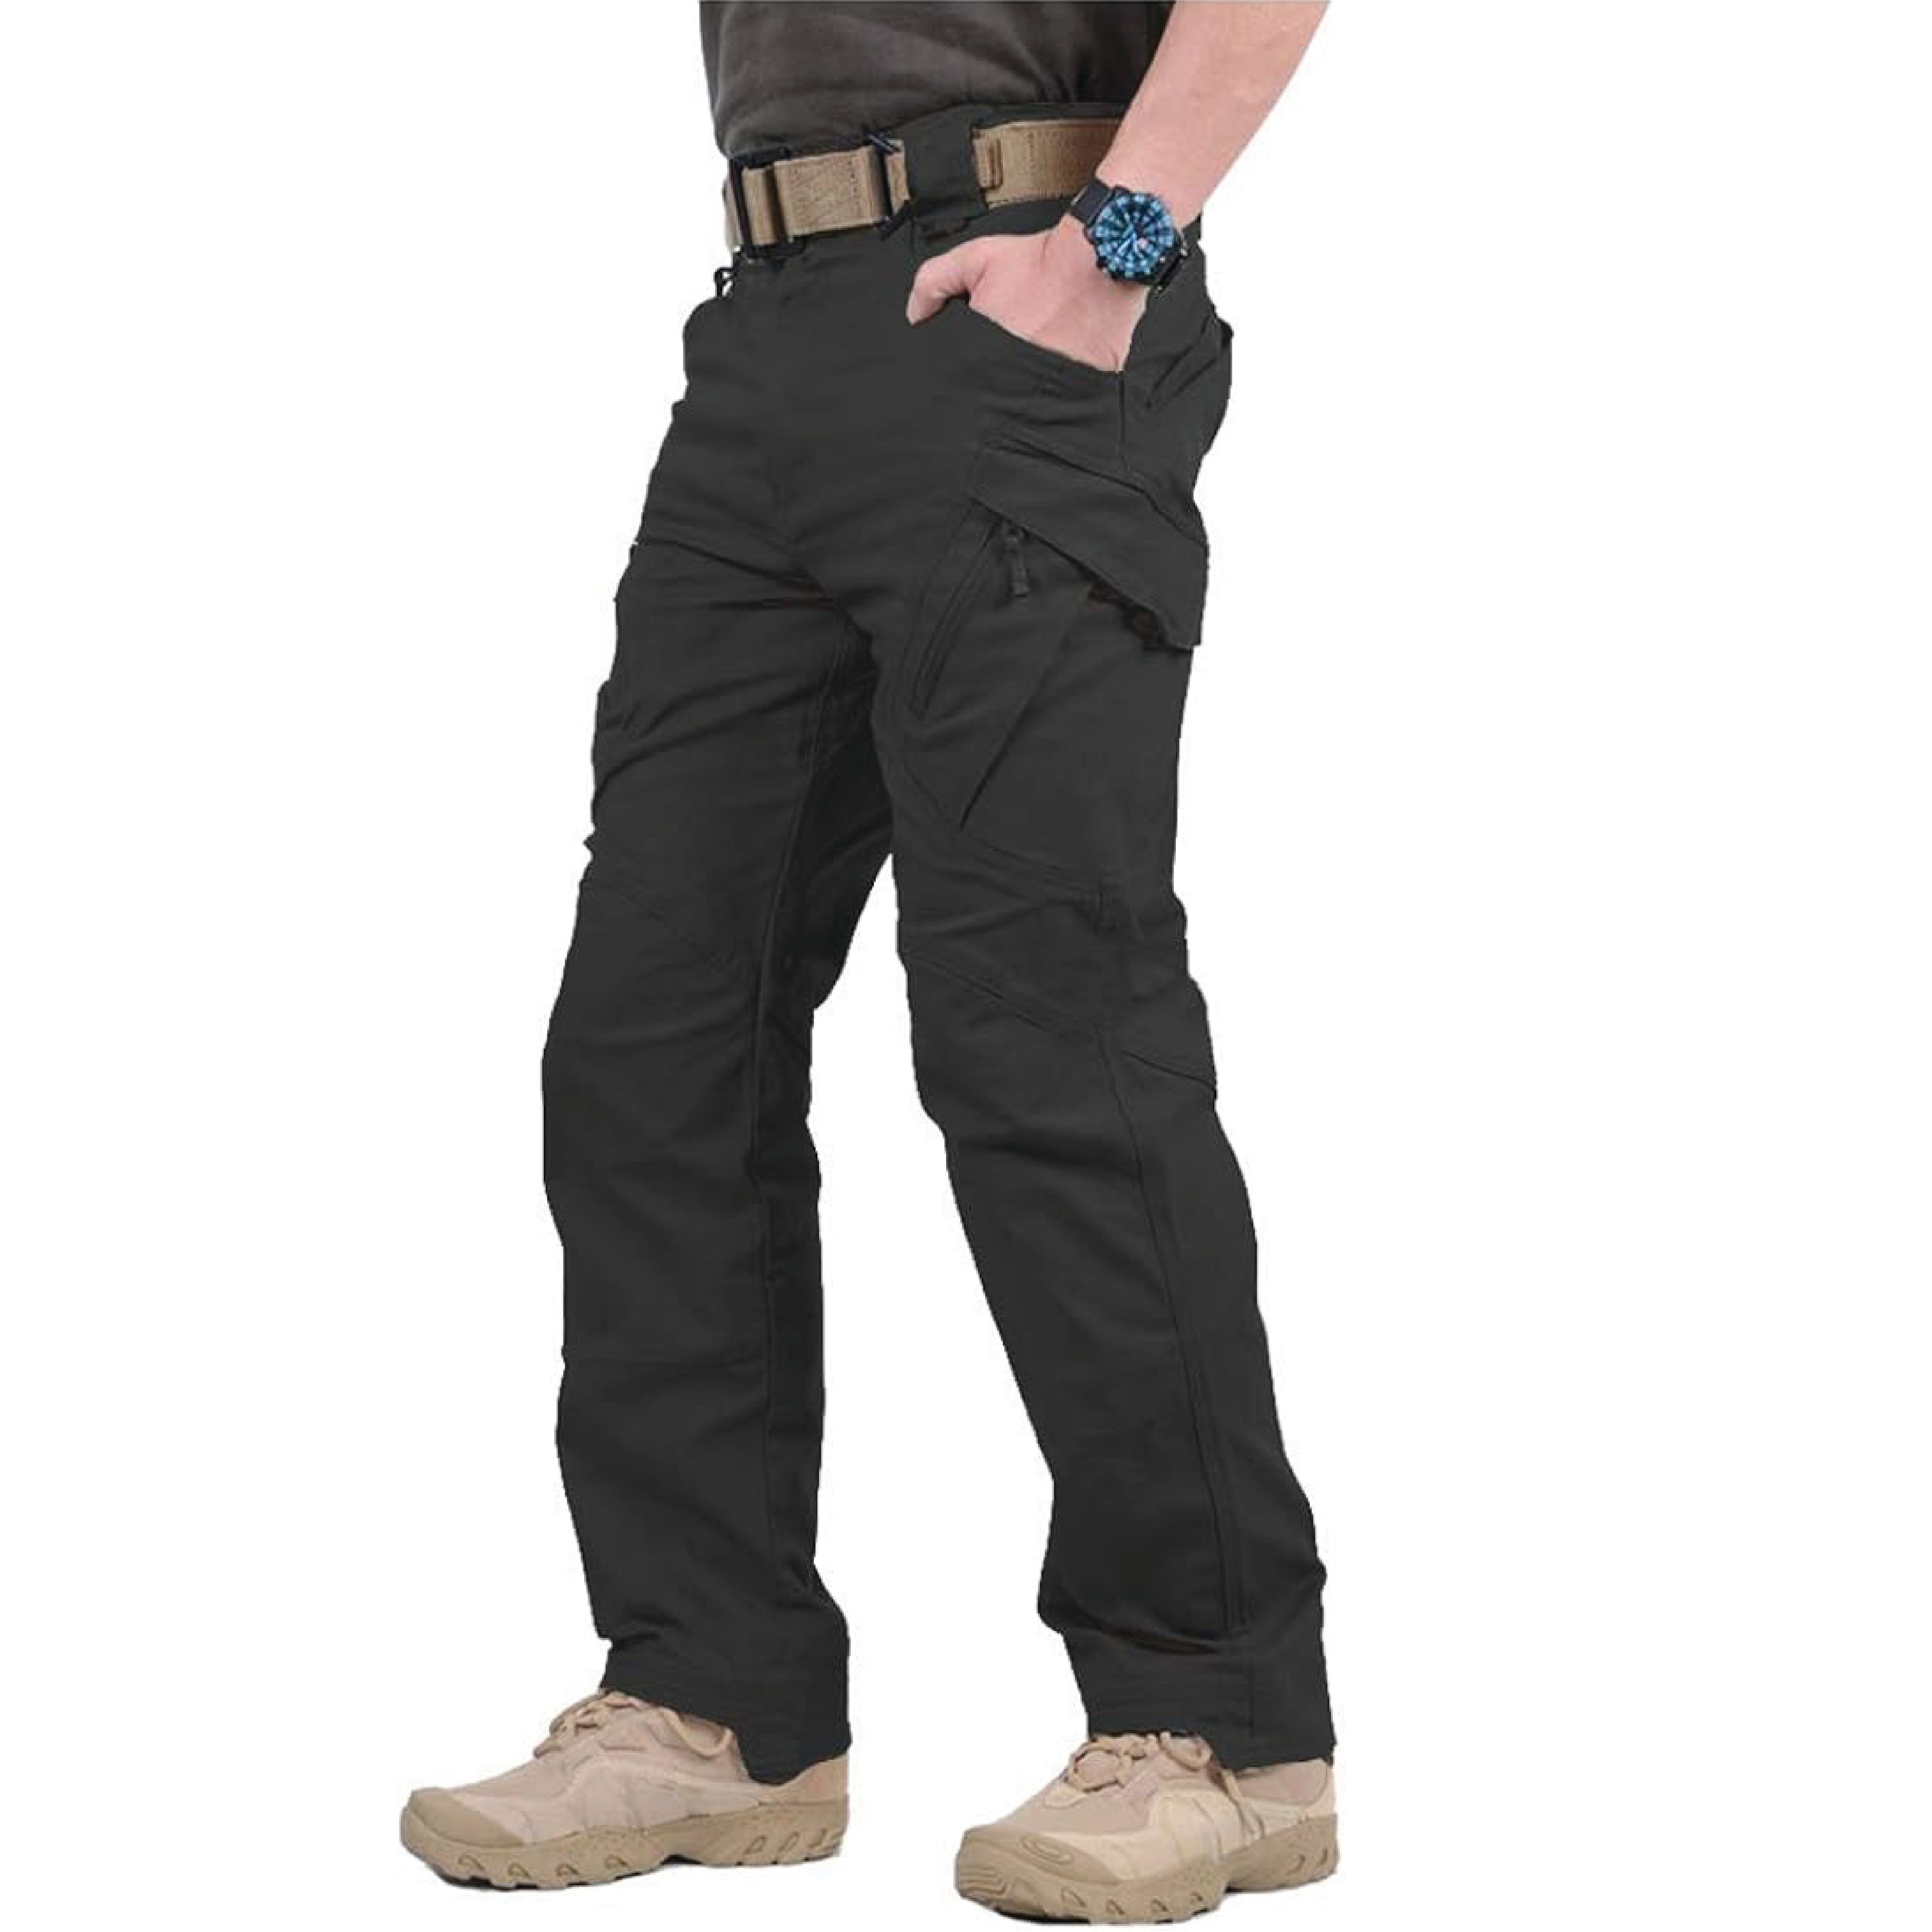 Black Military Cargo Pants Men's Check Working Pantalones Tactical Trousers  Men Army Combat Airsoft Casual Pants Camo Sweatpant - Sweatpants -  AliExpress